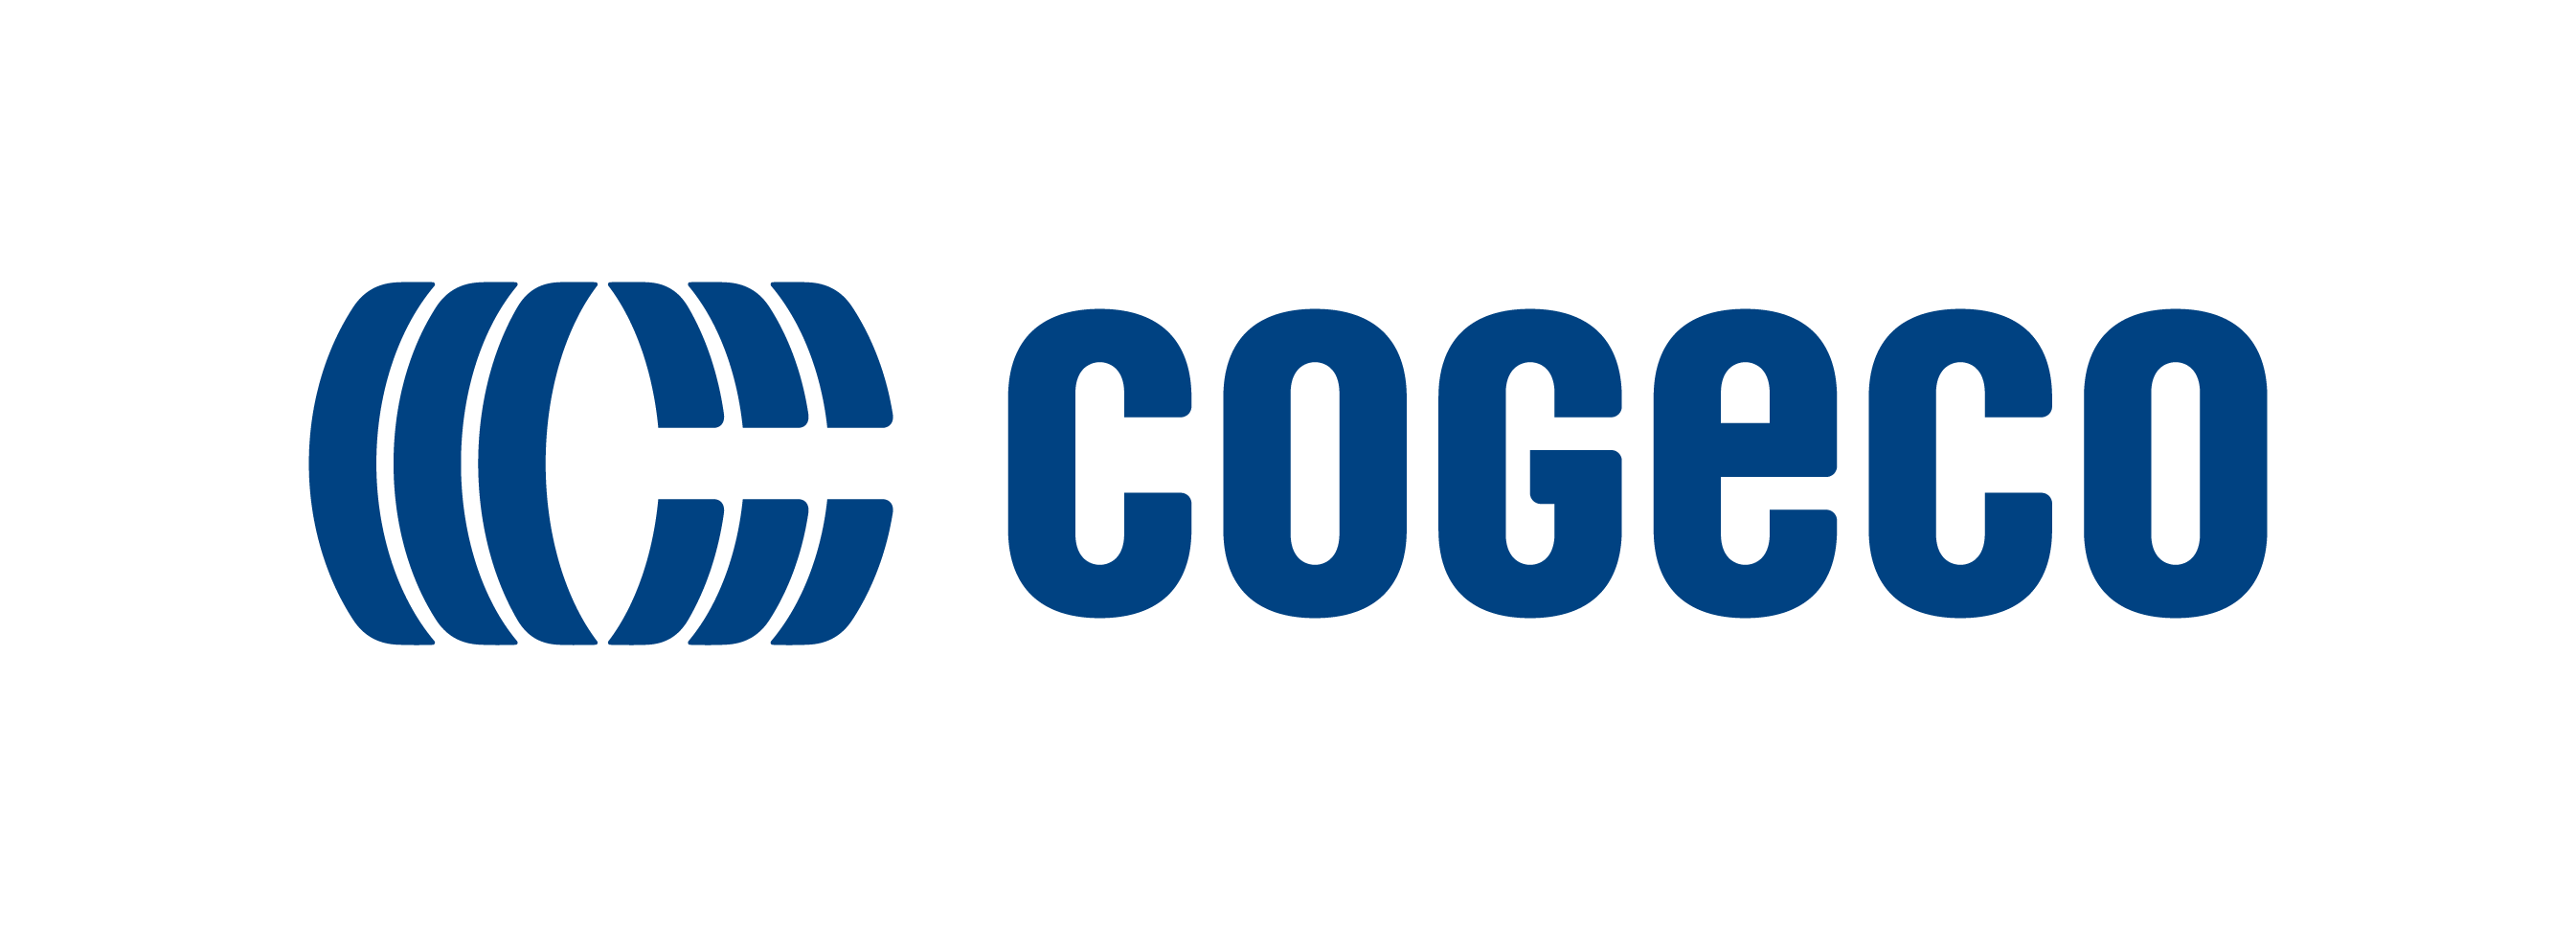 Cogeco Connexion Inc.